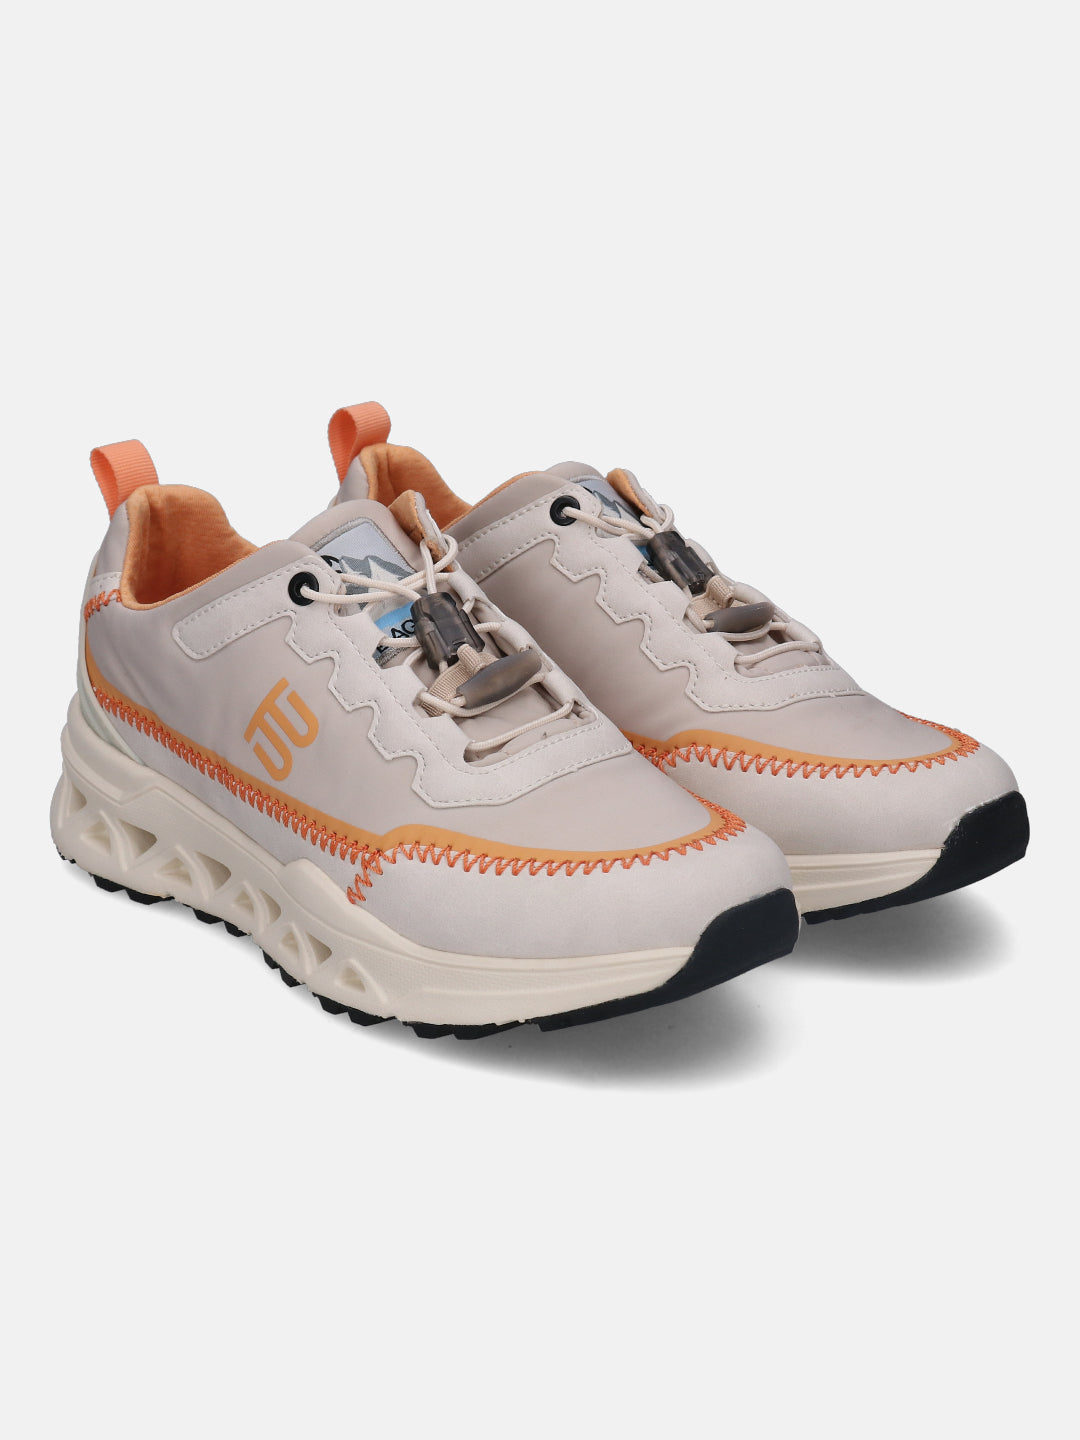 Coaster Off White & Orange Sneakers - BAGATT